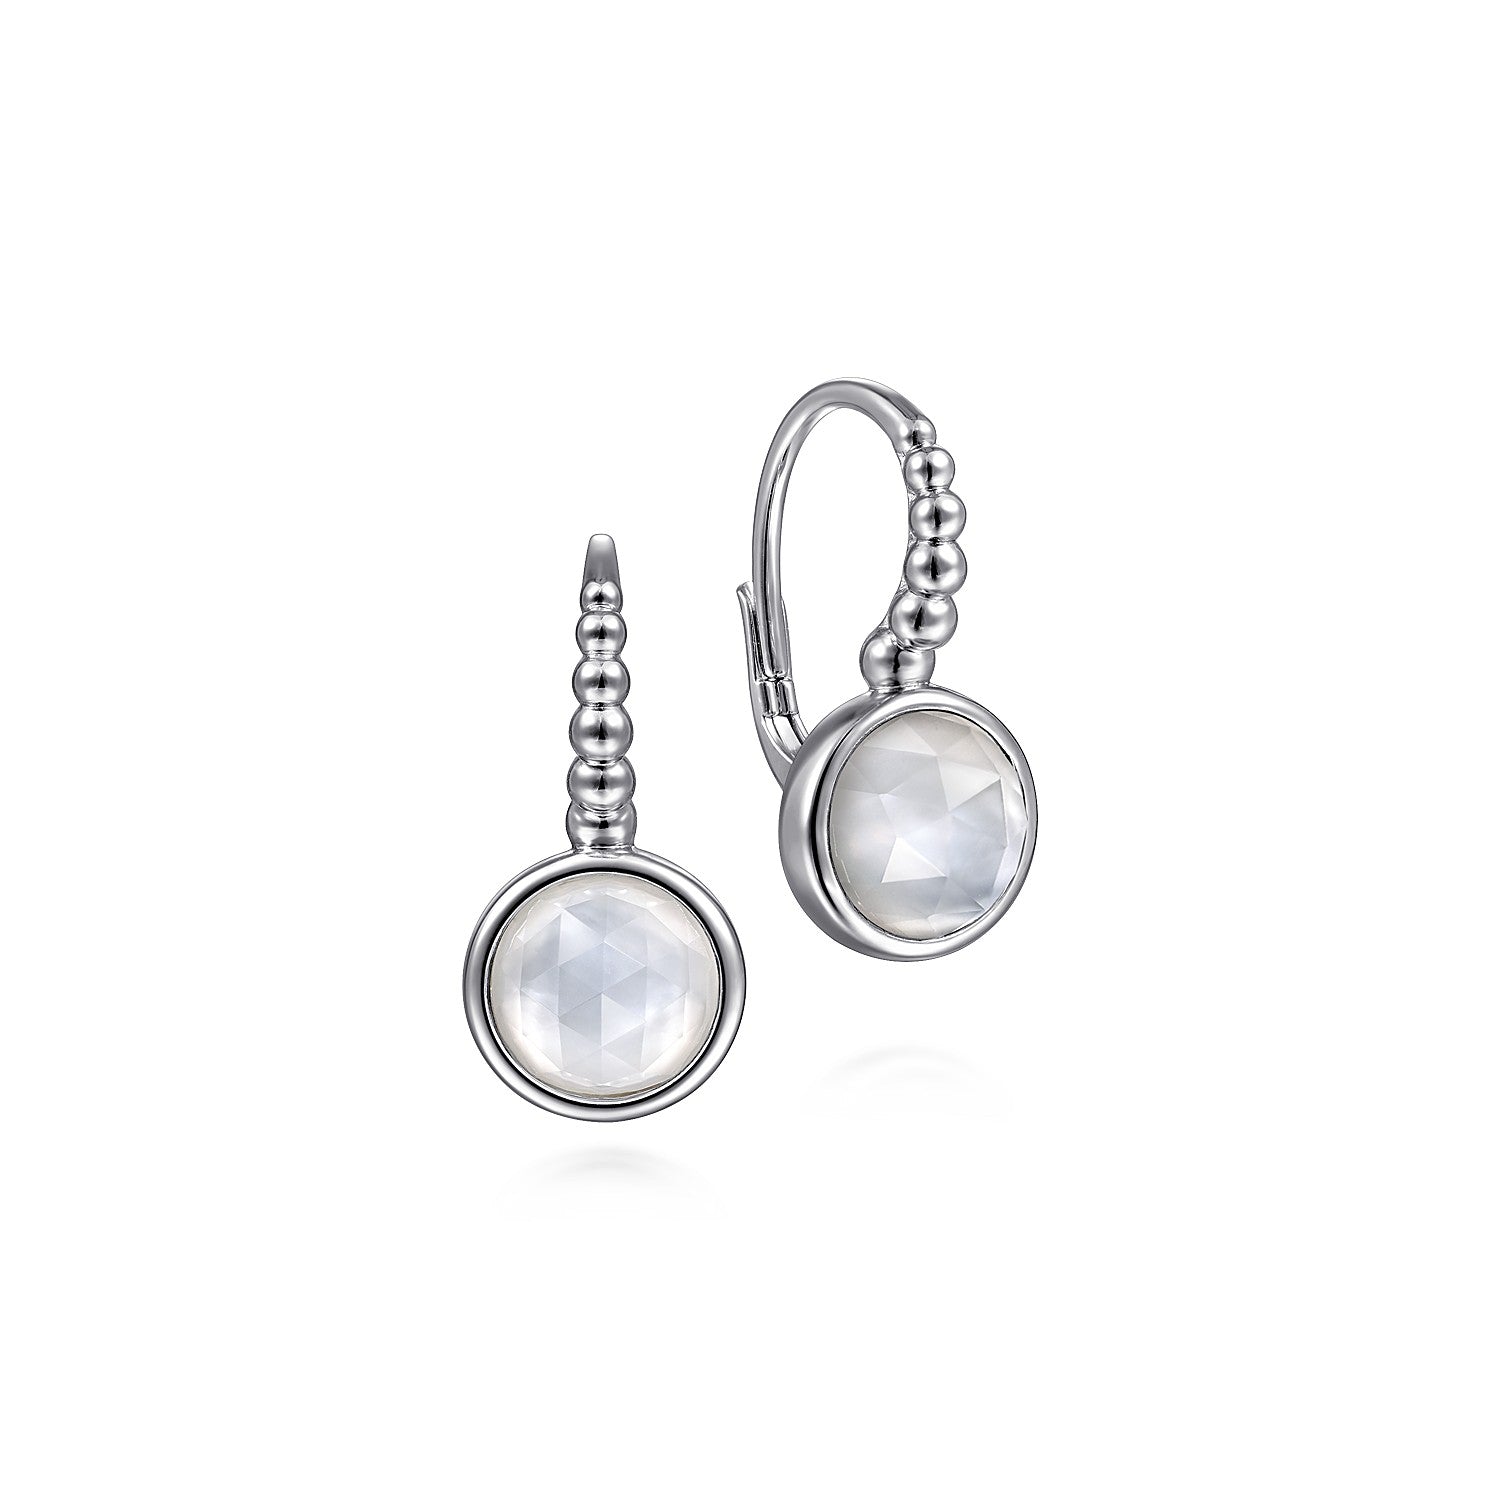 Gabriel & Co 925 Sterling Silver Rock Crystal and White MOP Leverback Earrings |  EG14156SVJXM